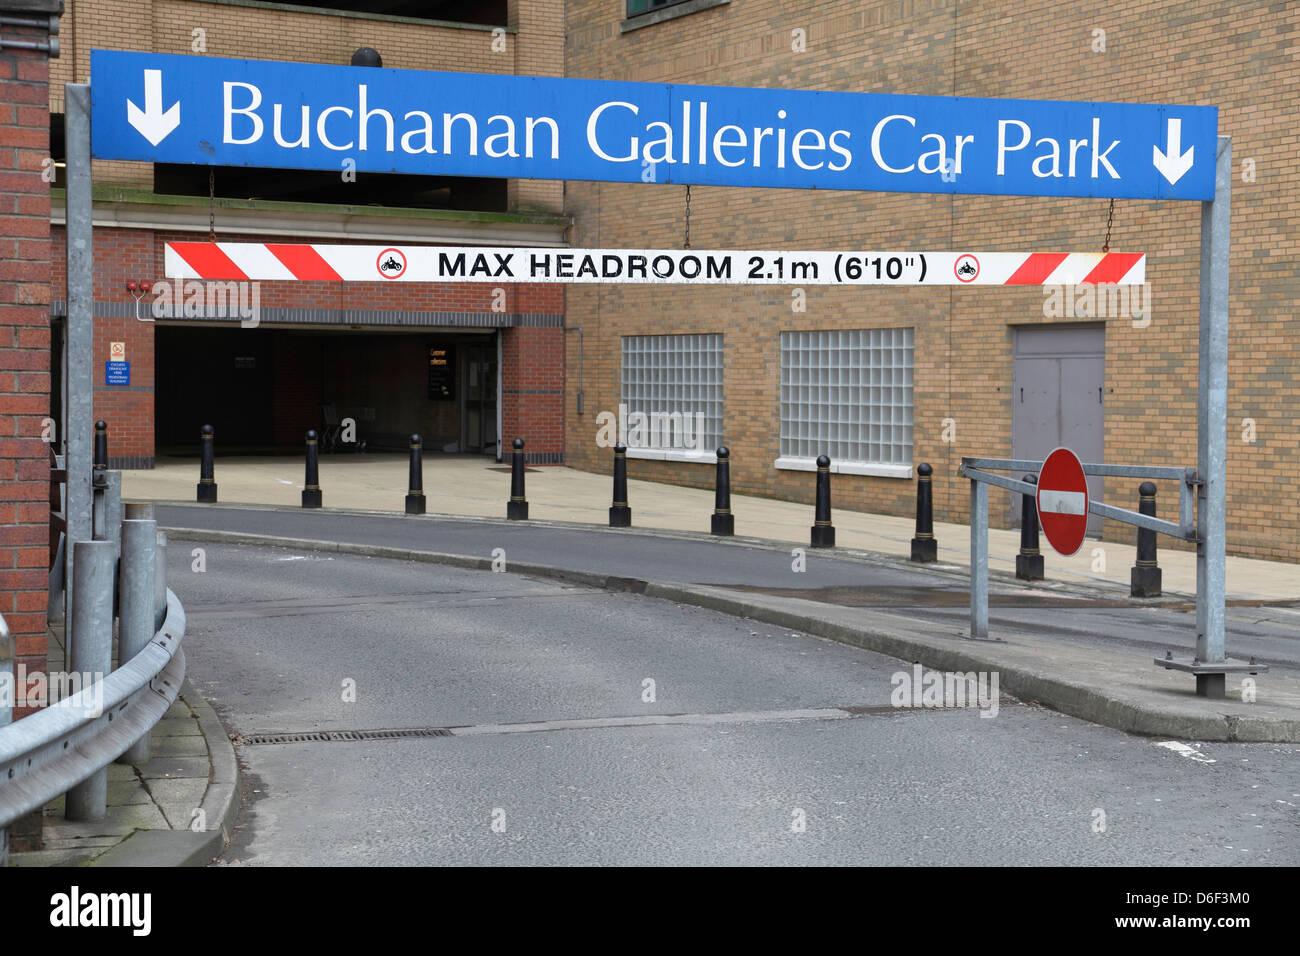 Buchanan Galleries Car Park sign in Glasgow city centre, Scotland, UK Stock Photo